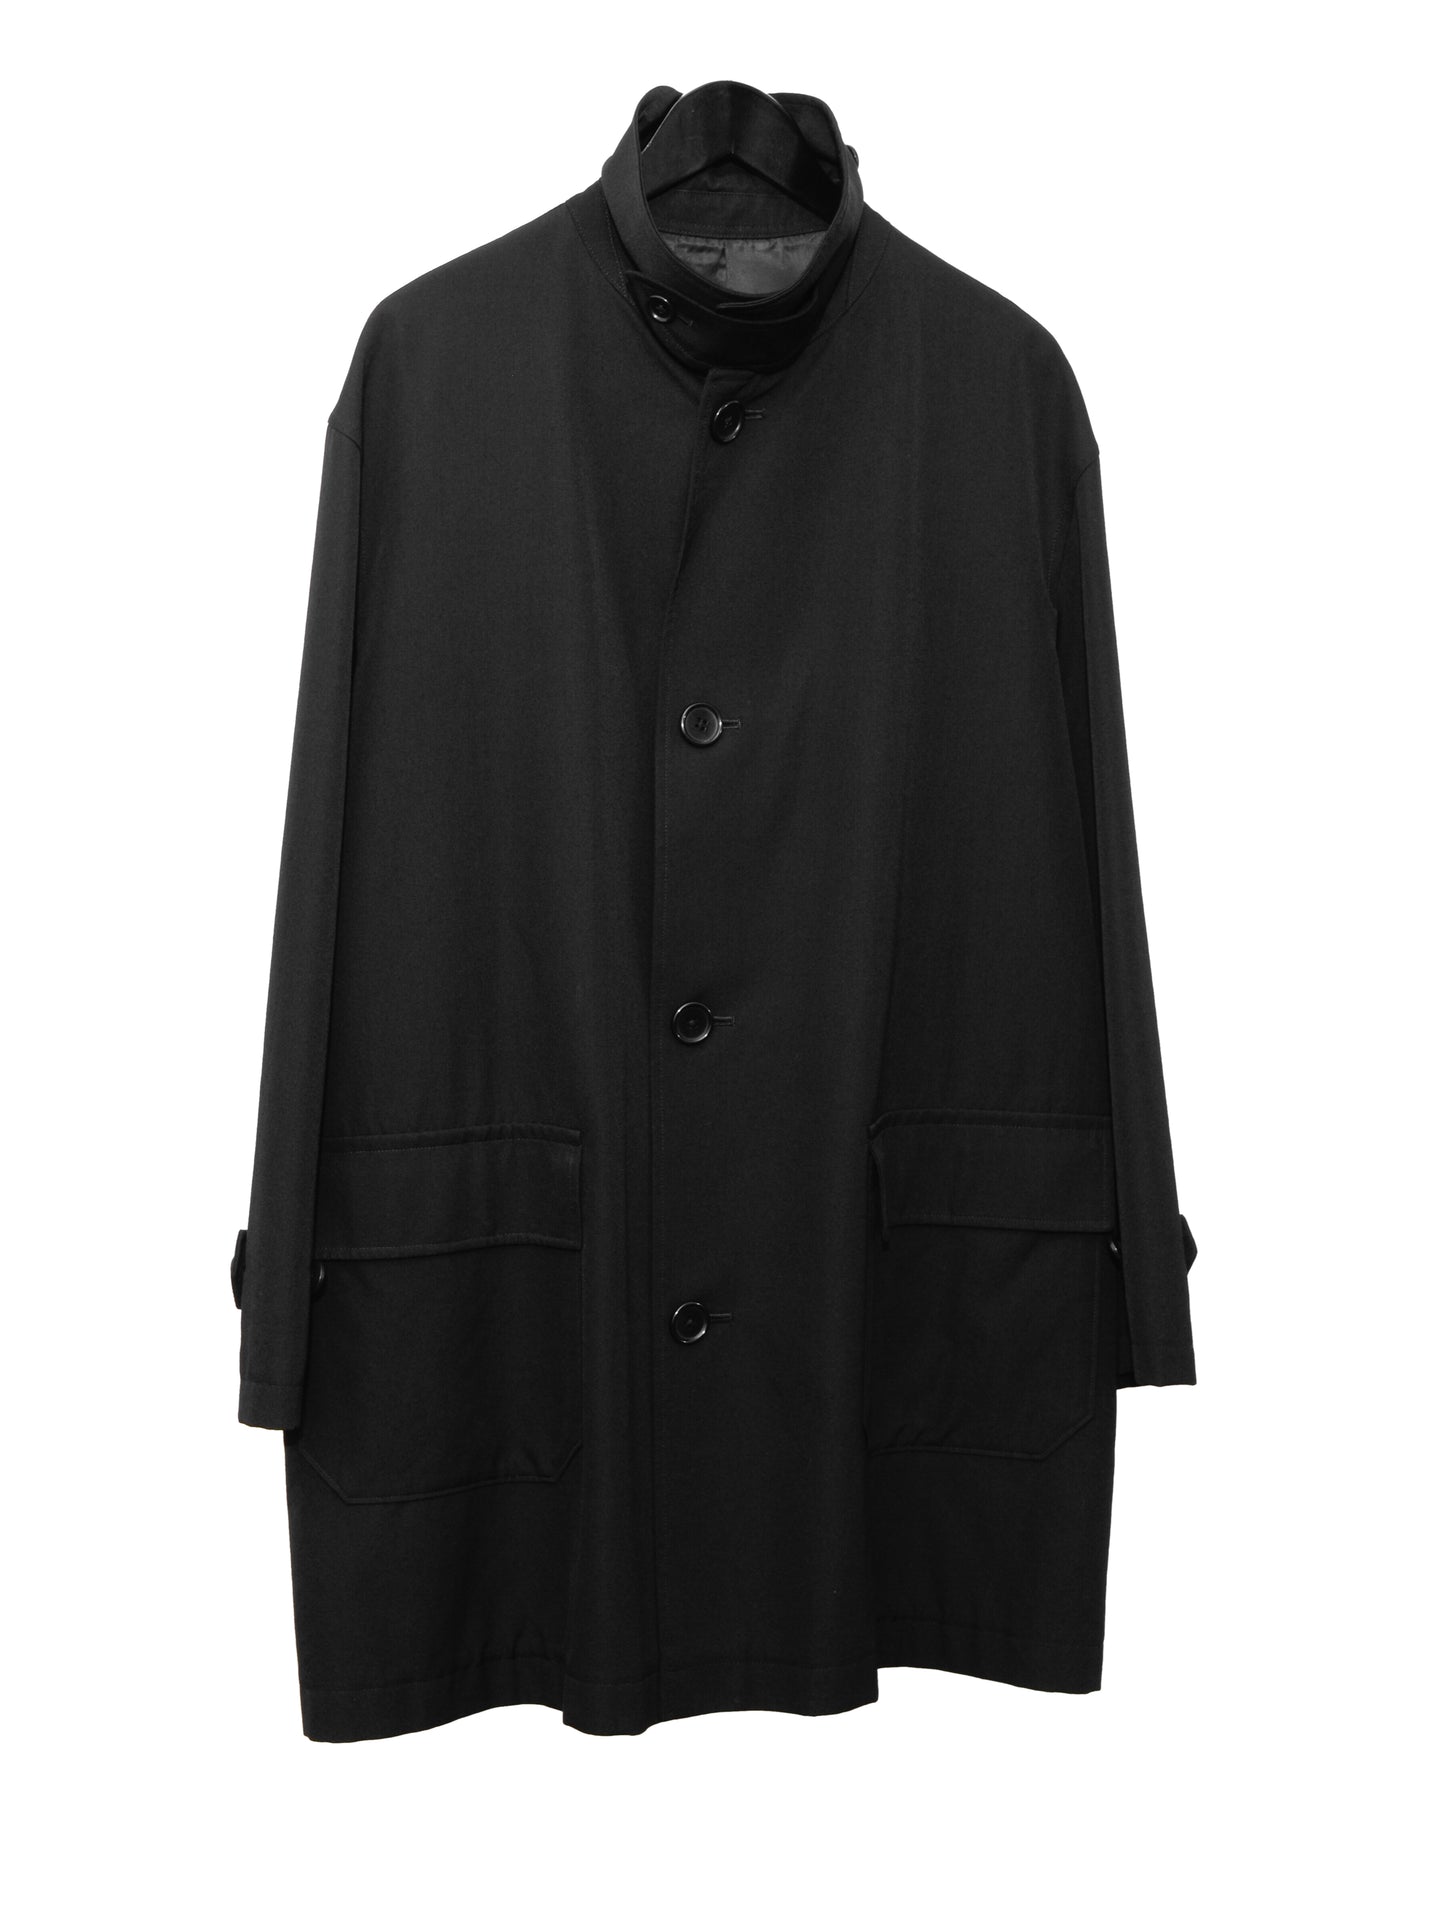 convertible collar coat black ∙ wool ∙ large